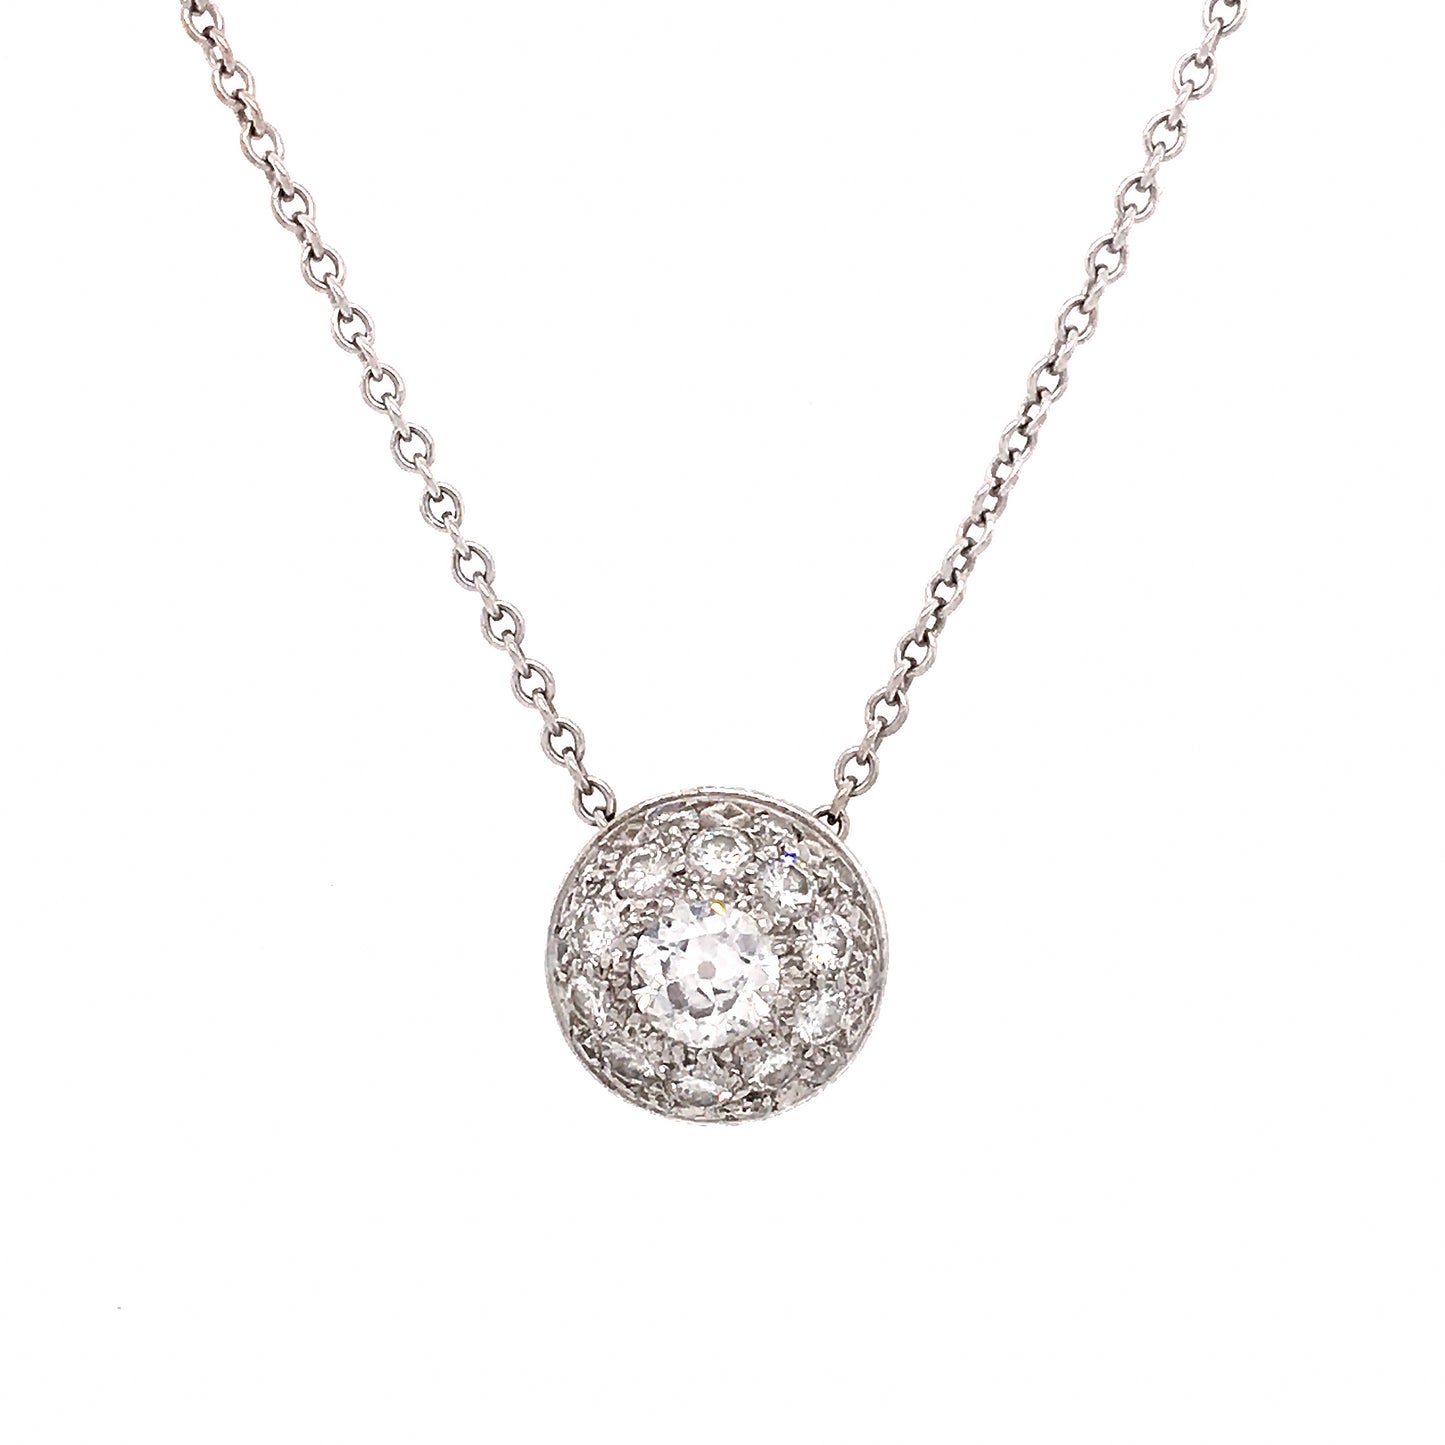 Vintage 14k White Gold Diamond Cluster Pendant Necklace